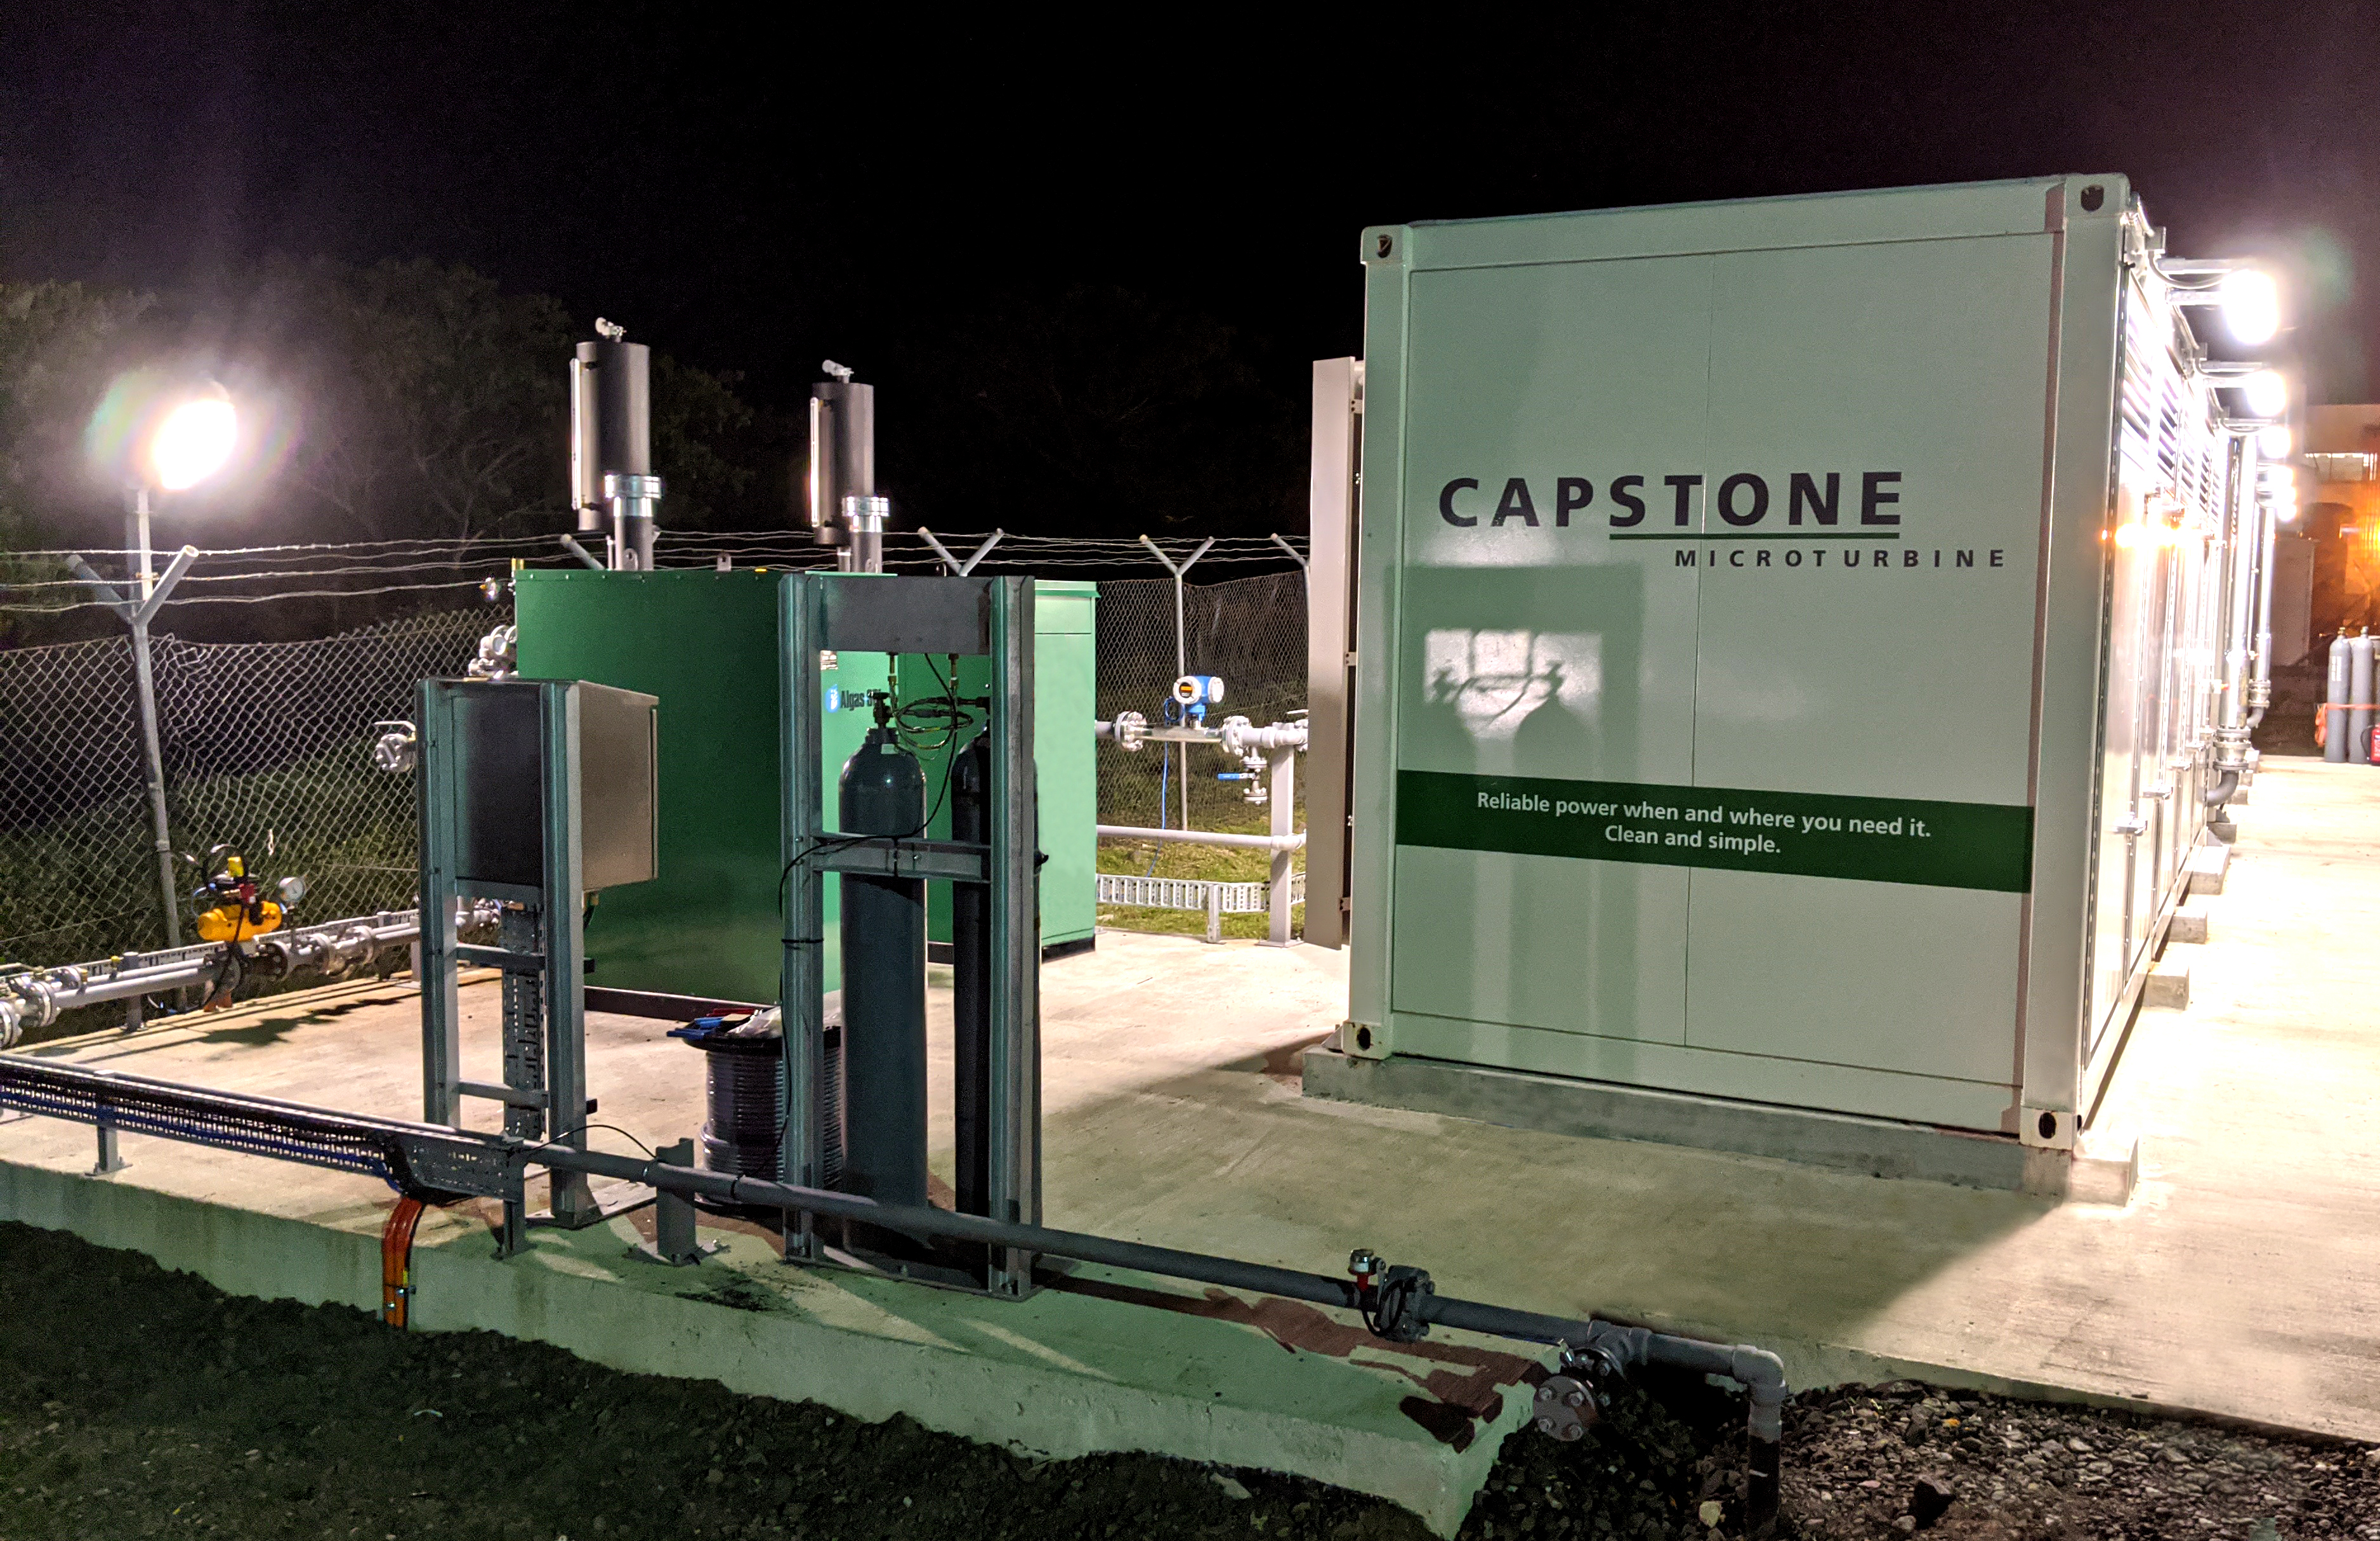 Capstone Turbine Corporation, Thursday, September 10, 2020, Press release picture